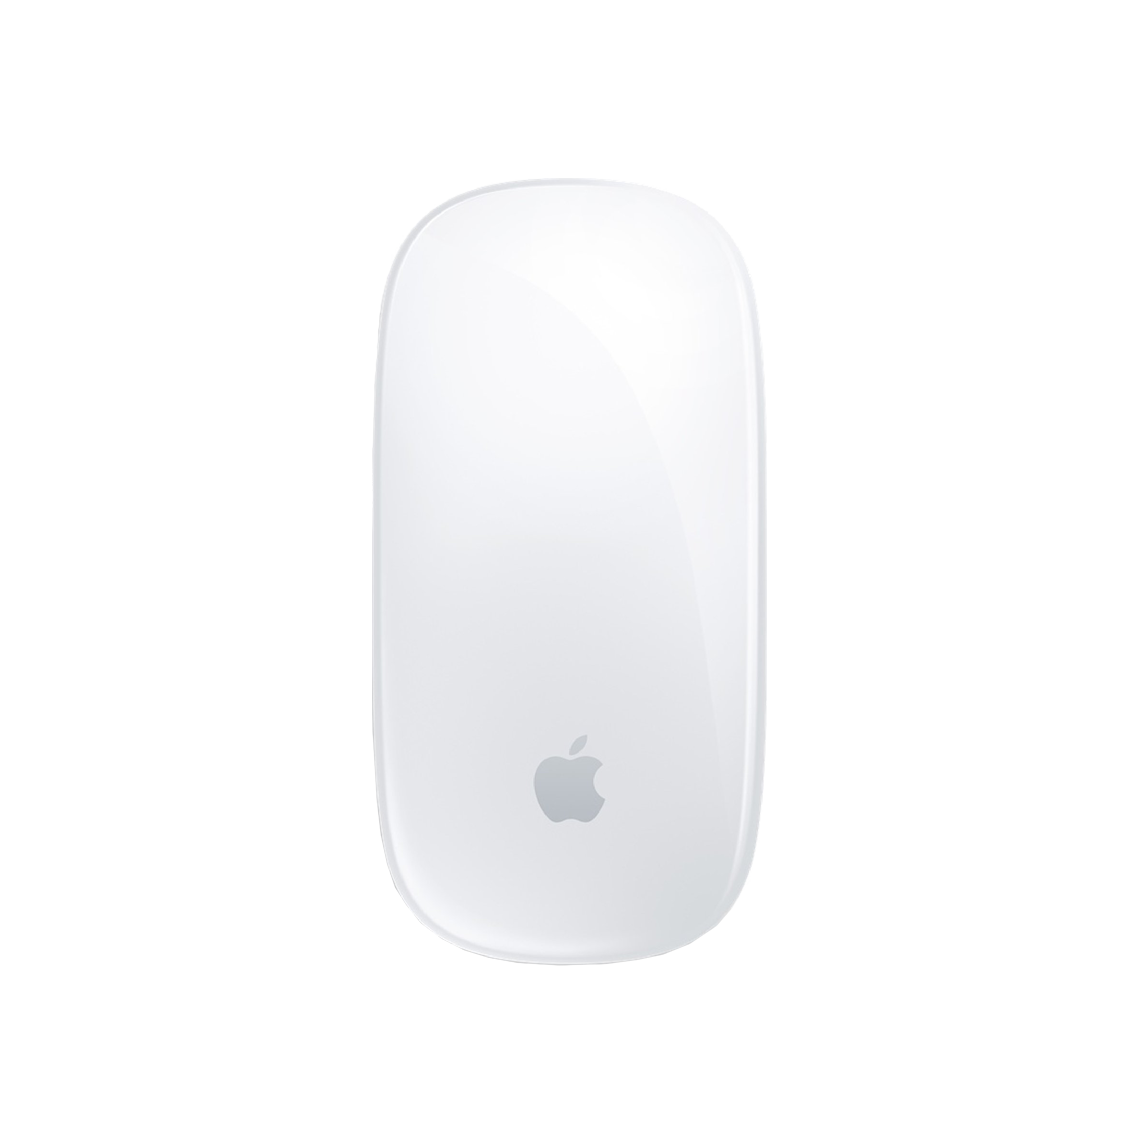 Refurbished Apple Magic Numeric Keyboard & Magic Mouse 2 + lightning cable